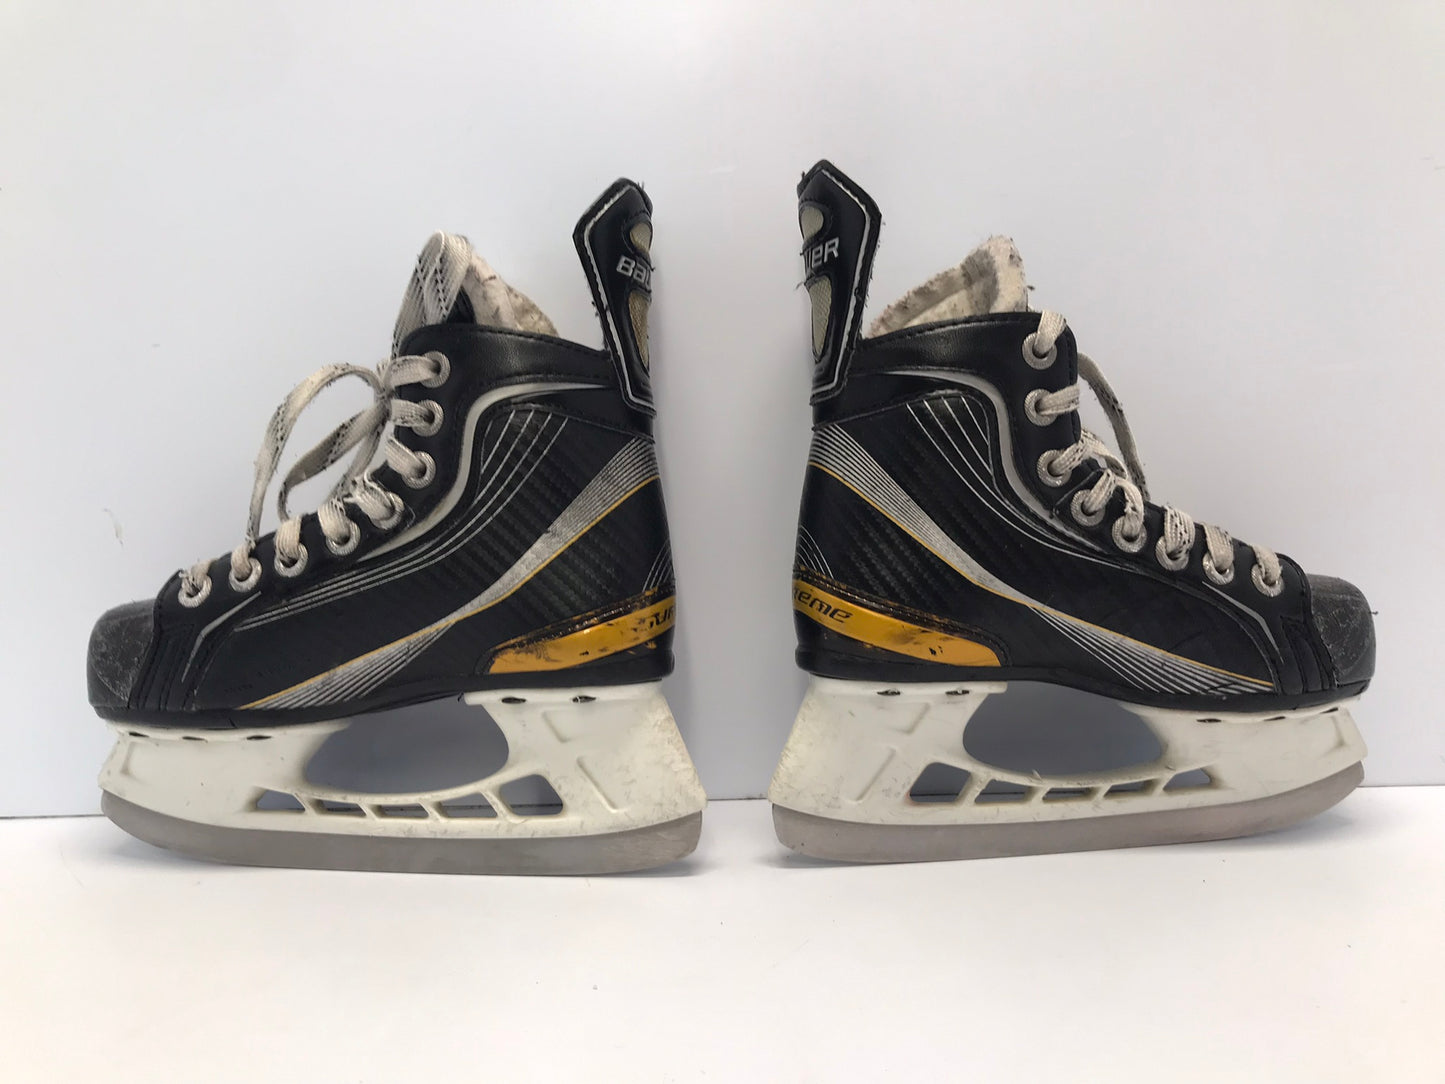 Hockey Skates Child Size 12 Shoe Size Bauer Supreme